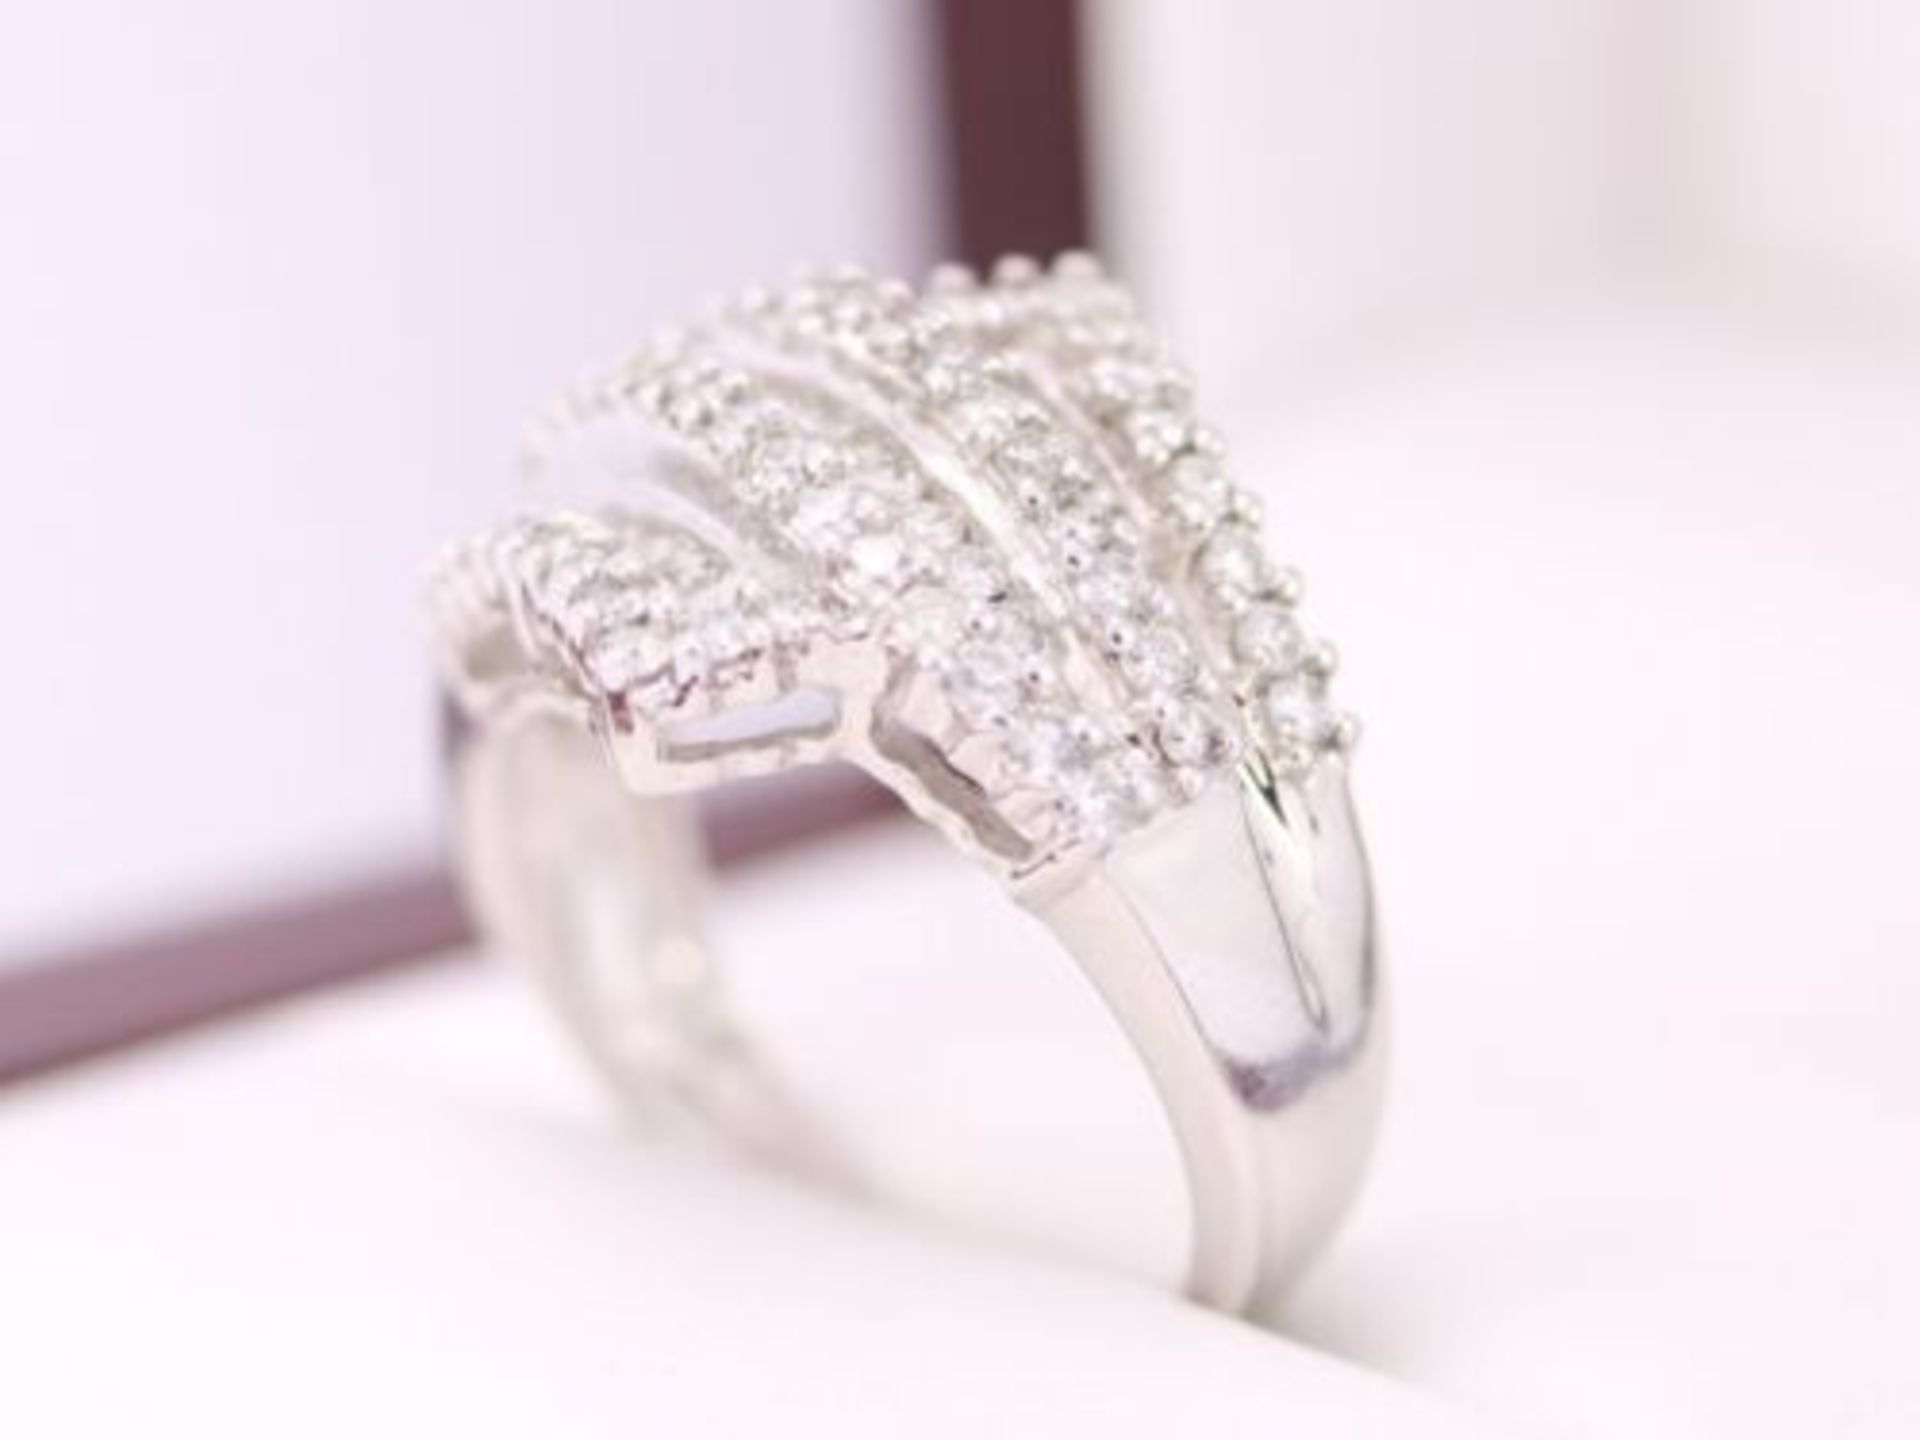 DIAMOND RING BEAUTIFUL 14CT WHITE GOLD RETRO STUNNING LADIES SIZE O 1/2 6.7G - Image 3 of 5